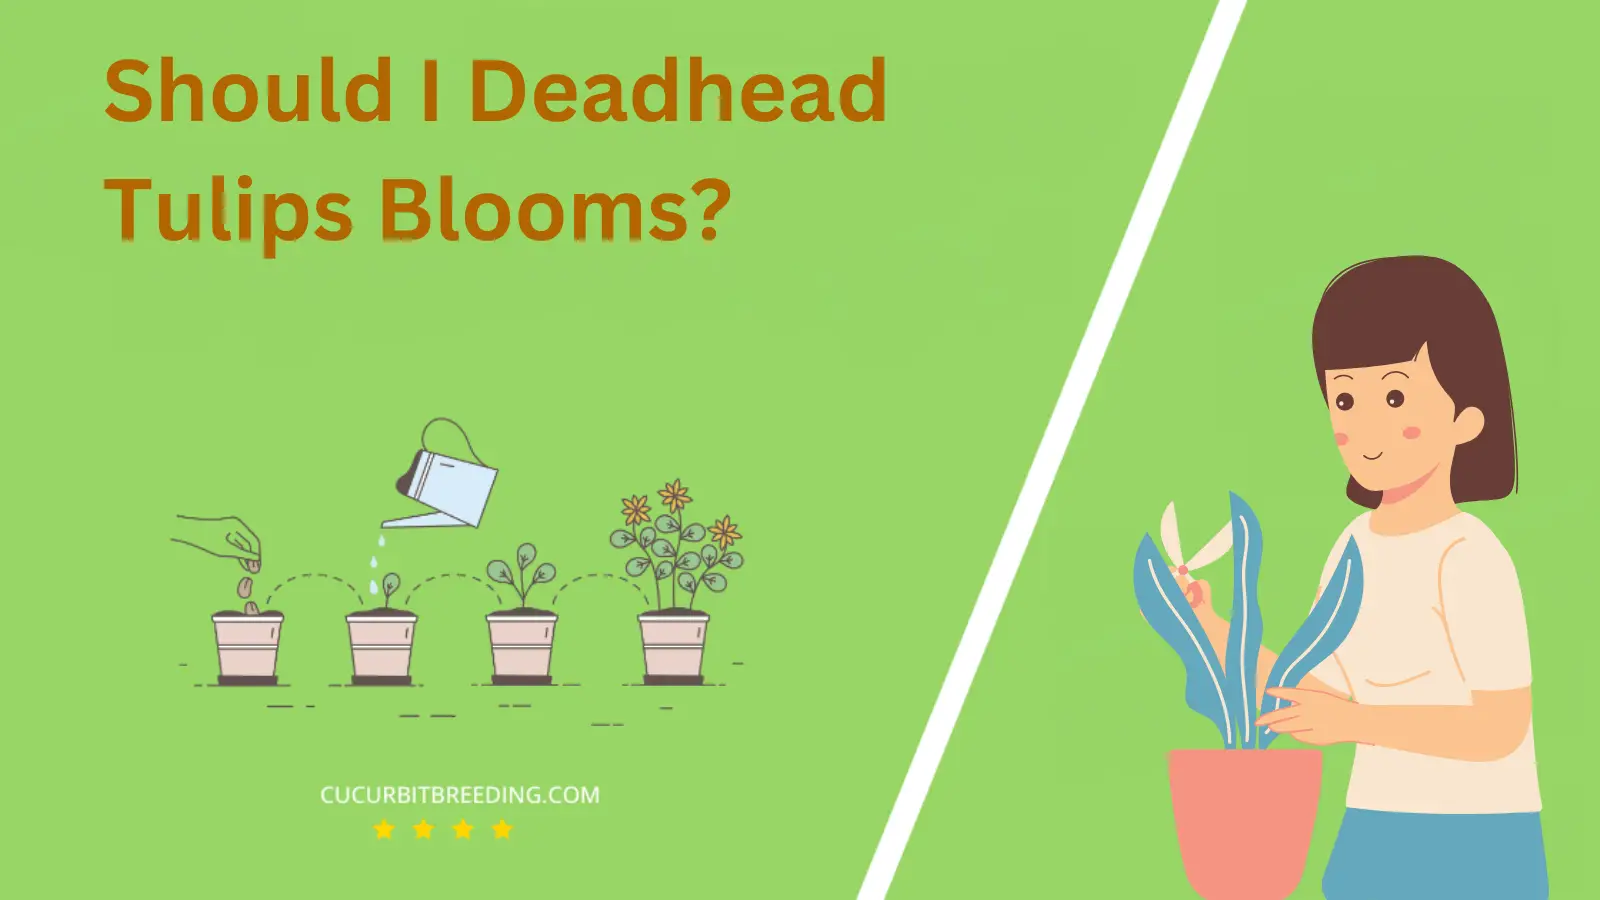 Should I Deadhead Tulips Blooms?